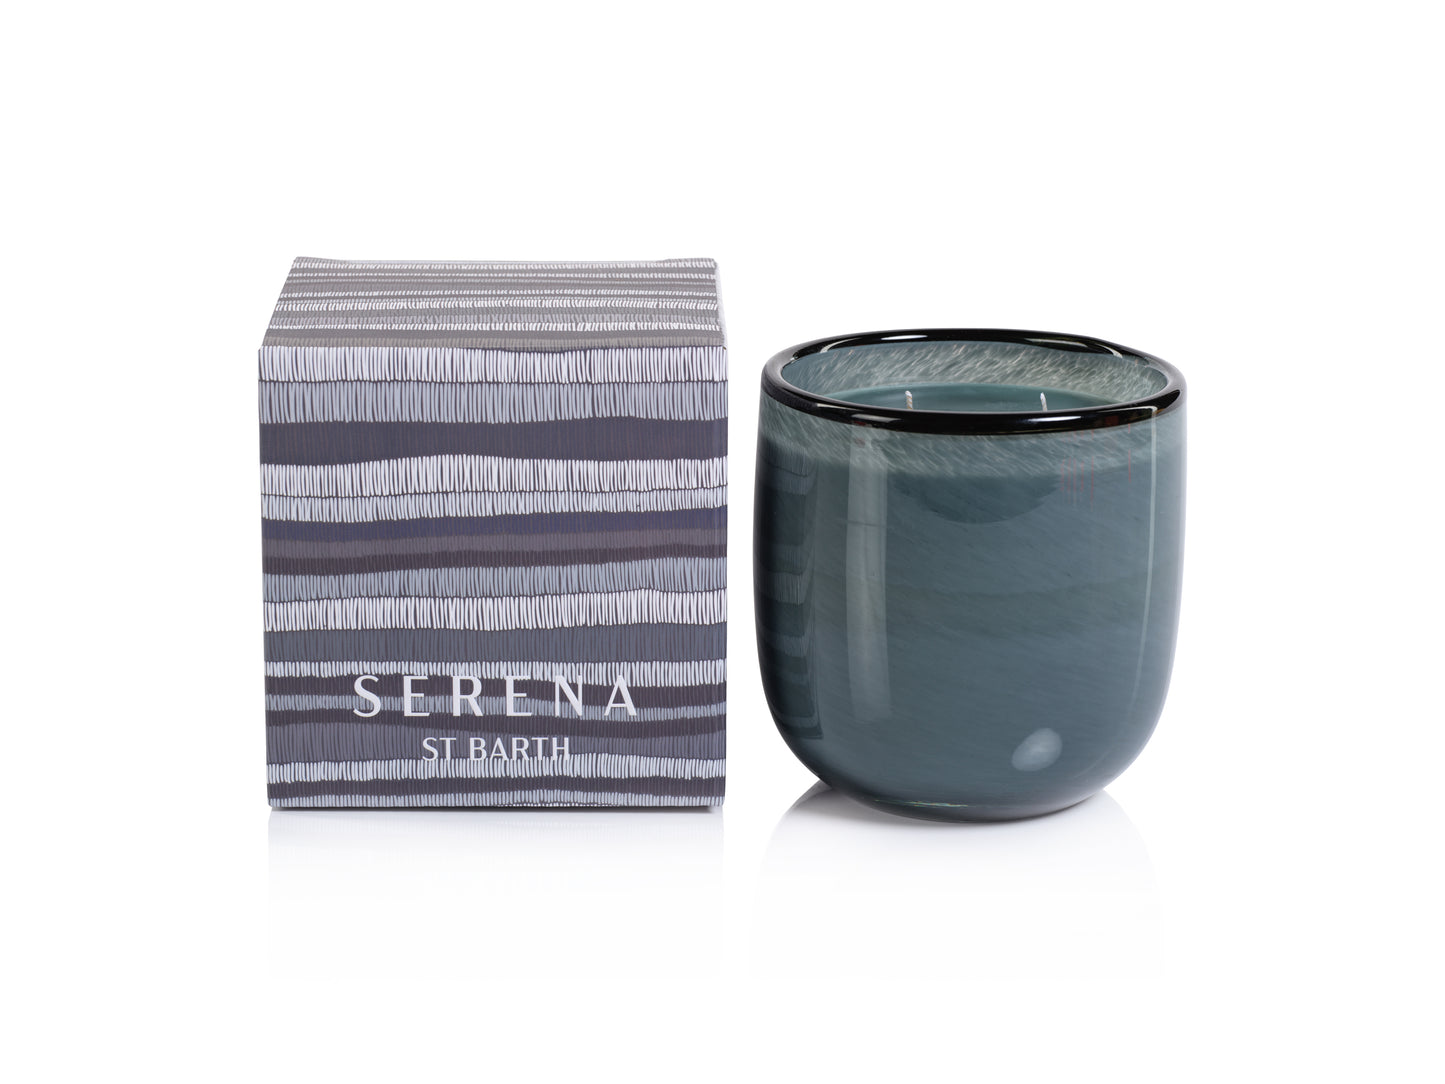 SAINT BARTH LOUNGE Zodax Serena Saint Barth Scented Jar Candle 14.5 oz - Gift Boxed